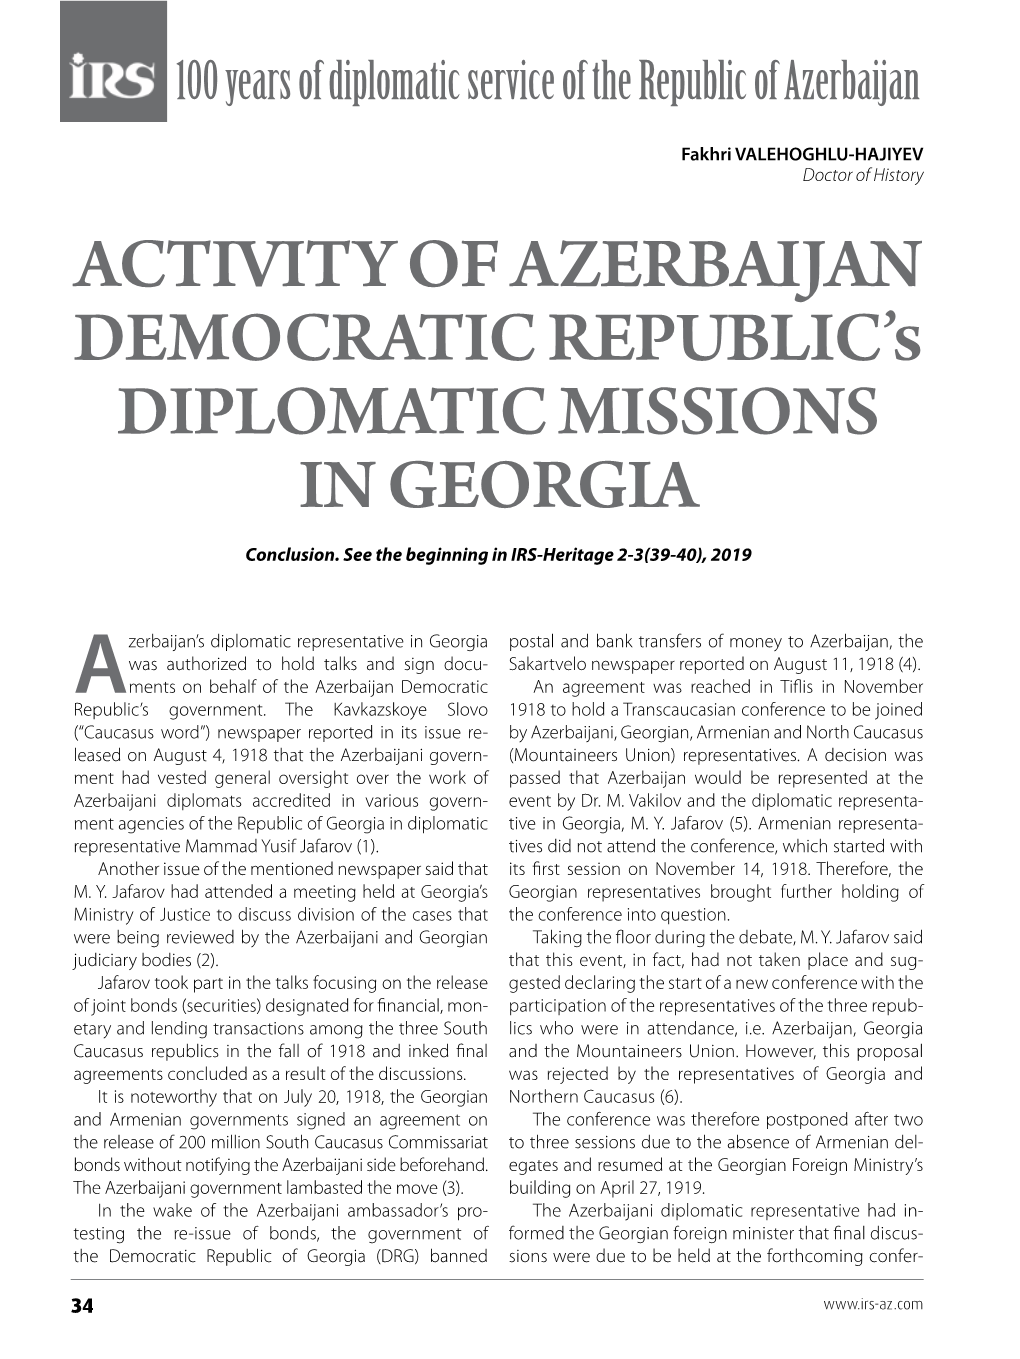 Activity of Azerbaijan Democratic Republic's